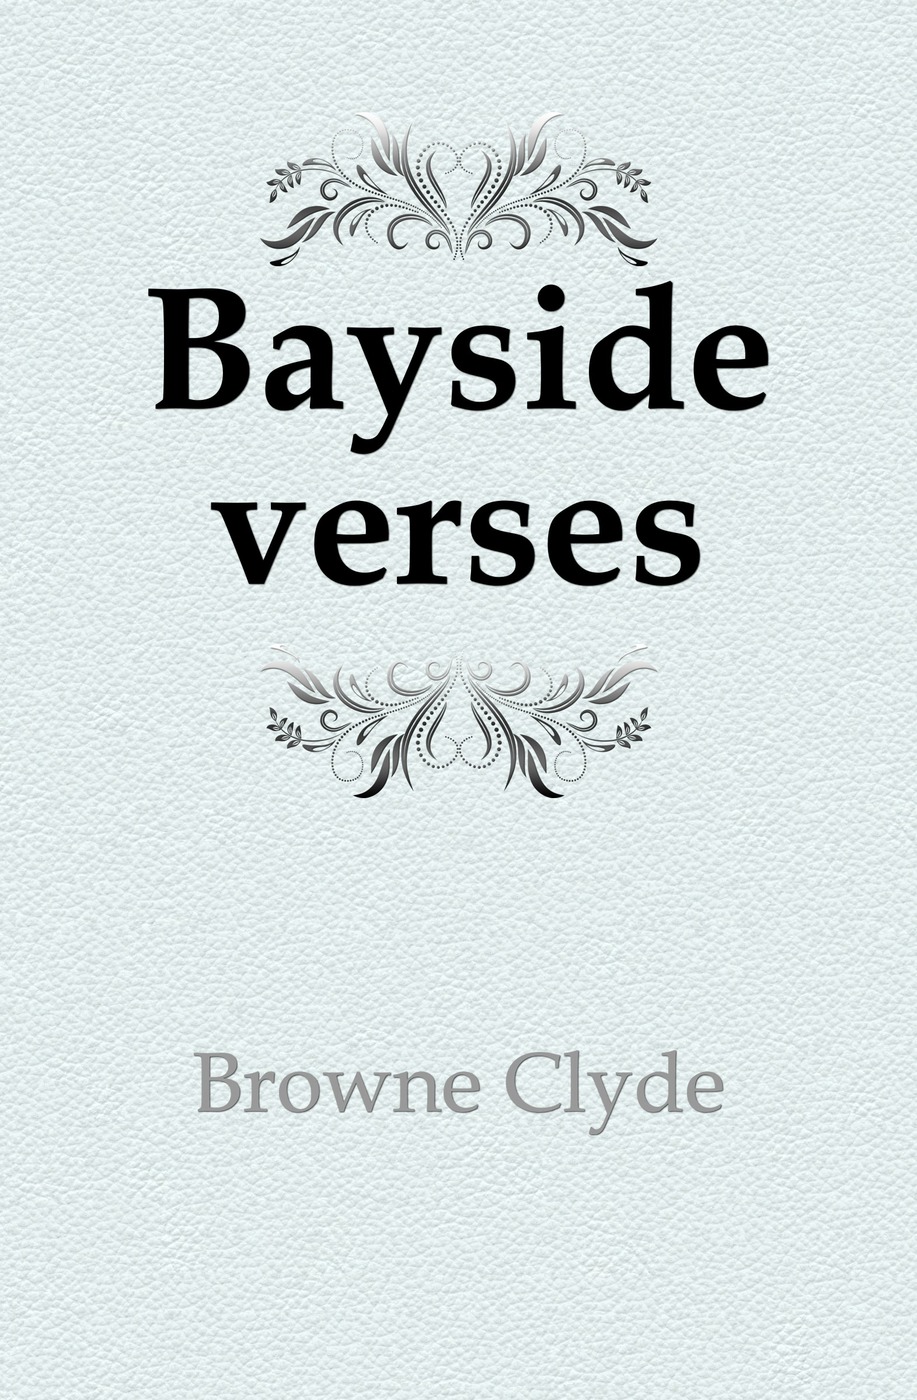 Bayside verses